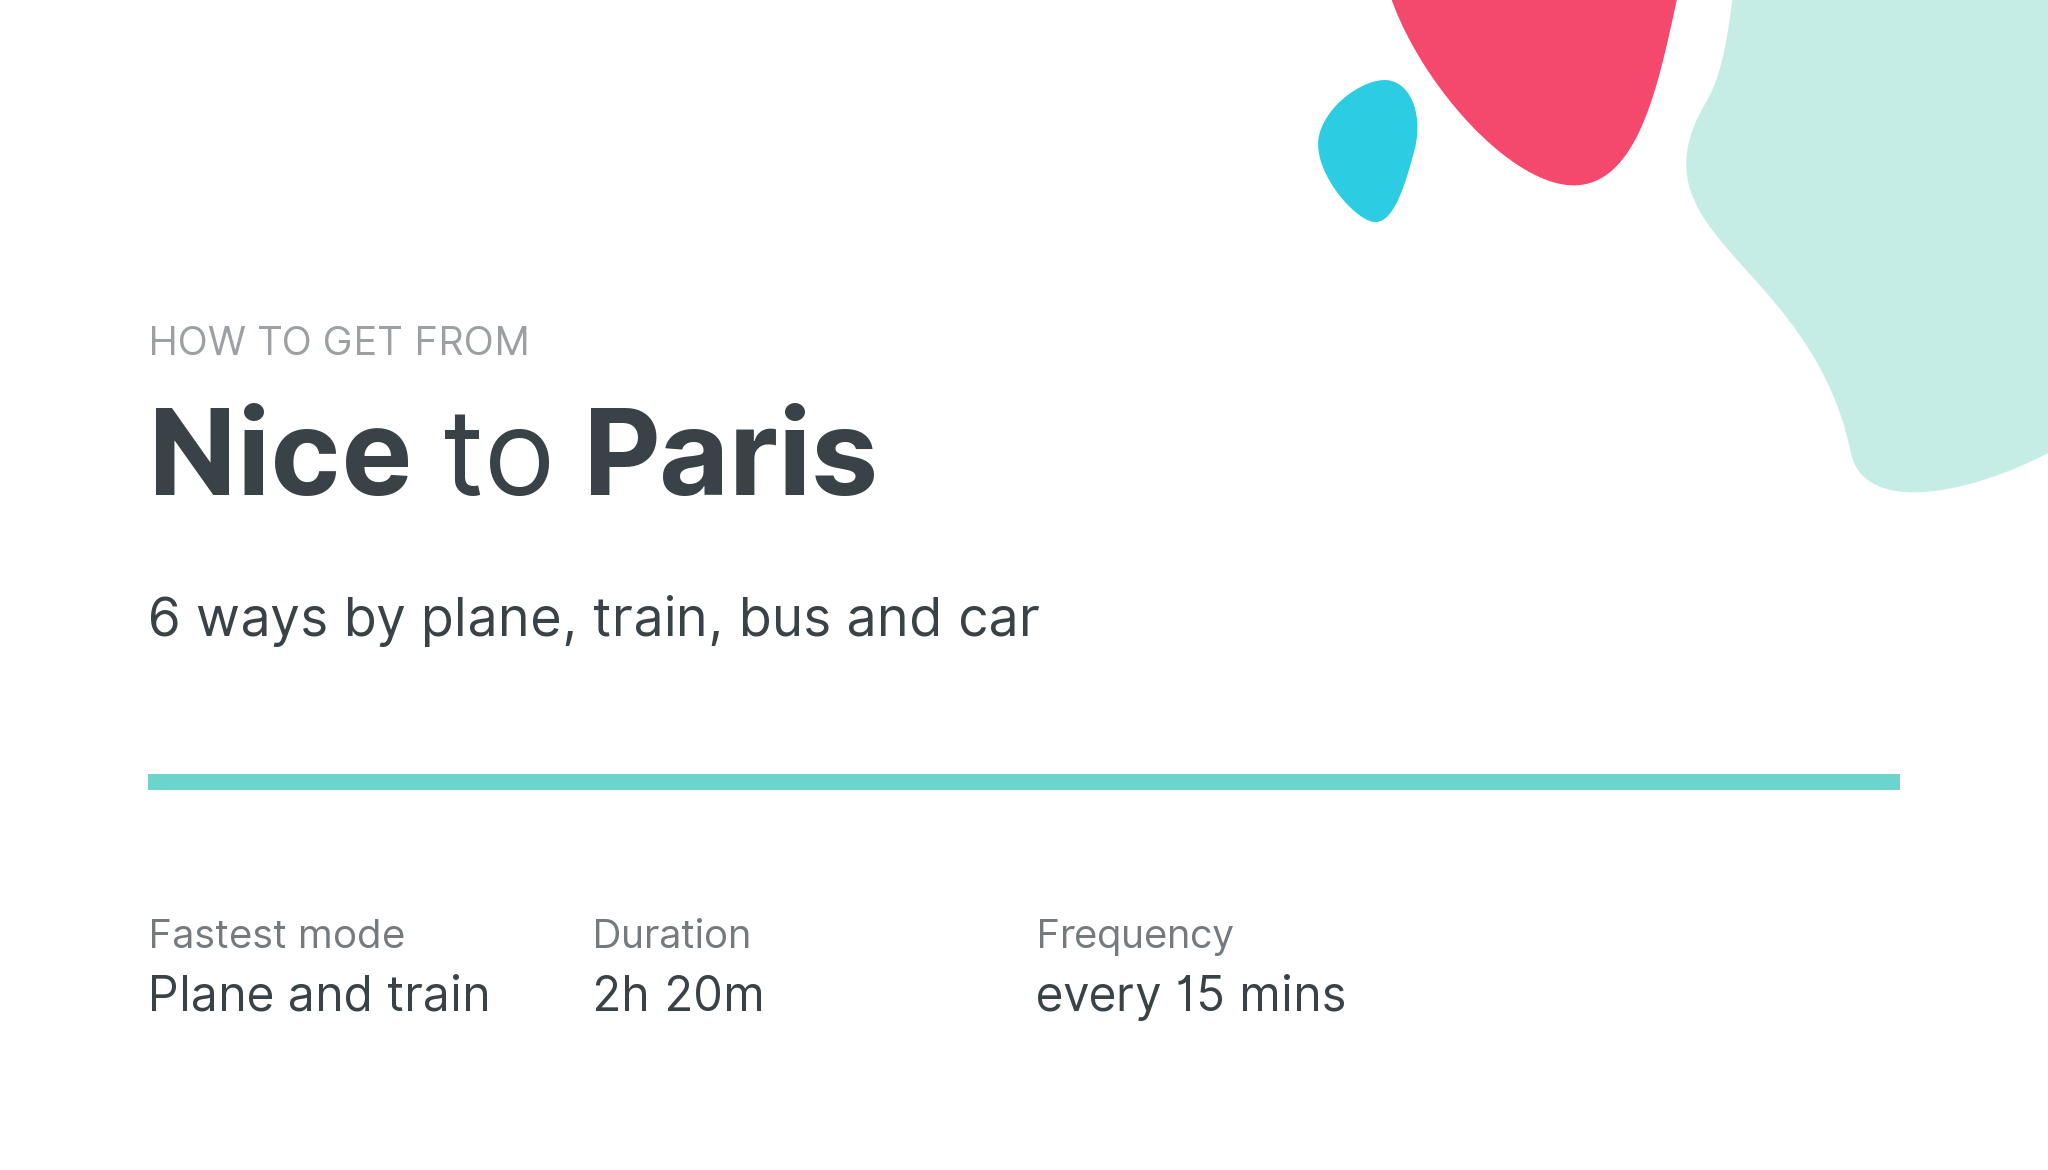 How do I get from Nice to Paris